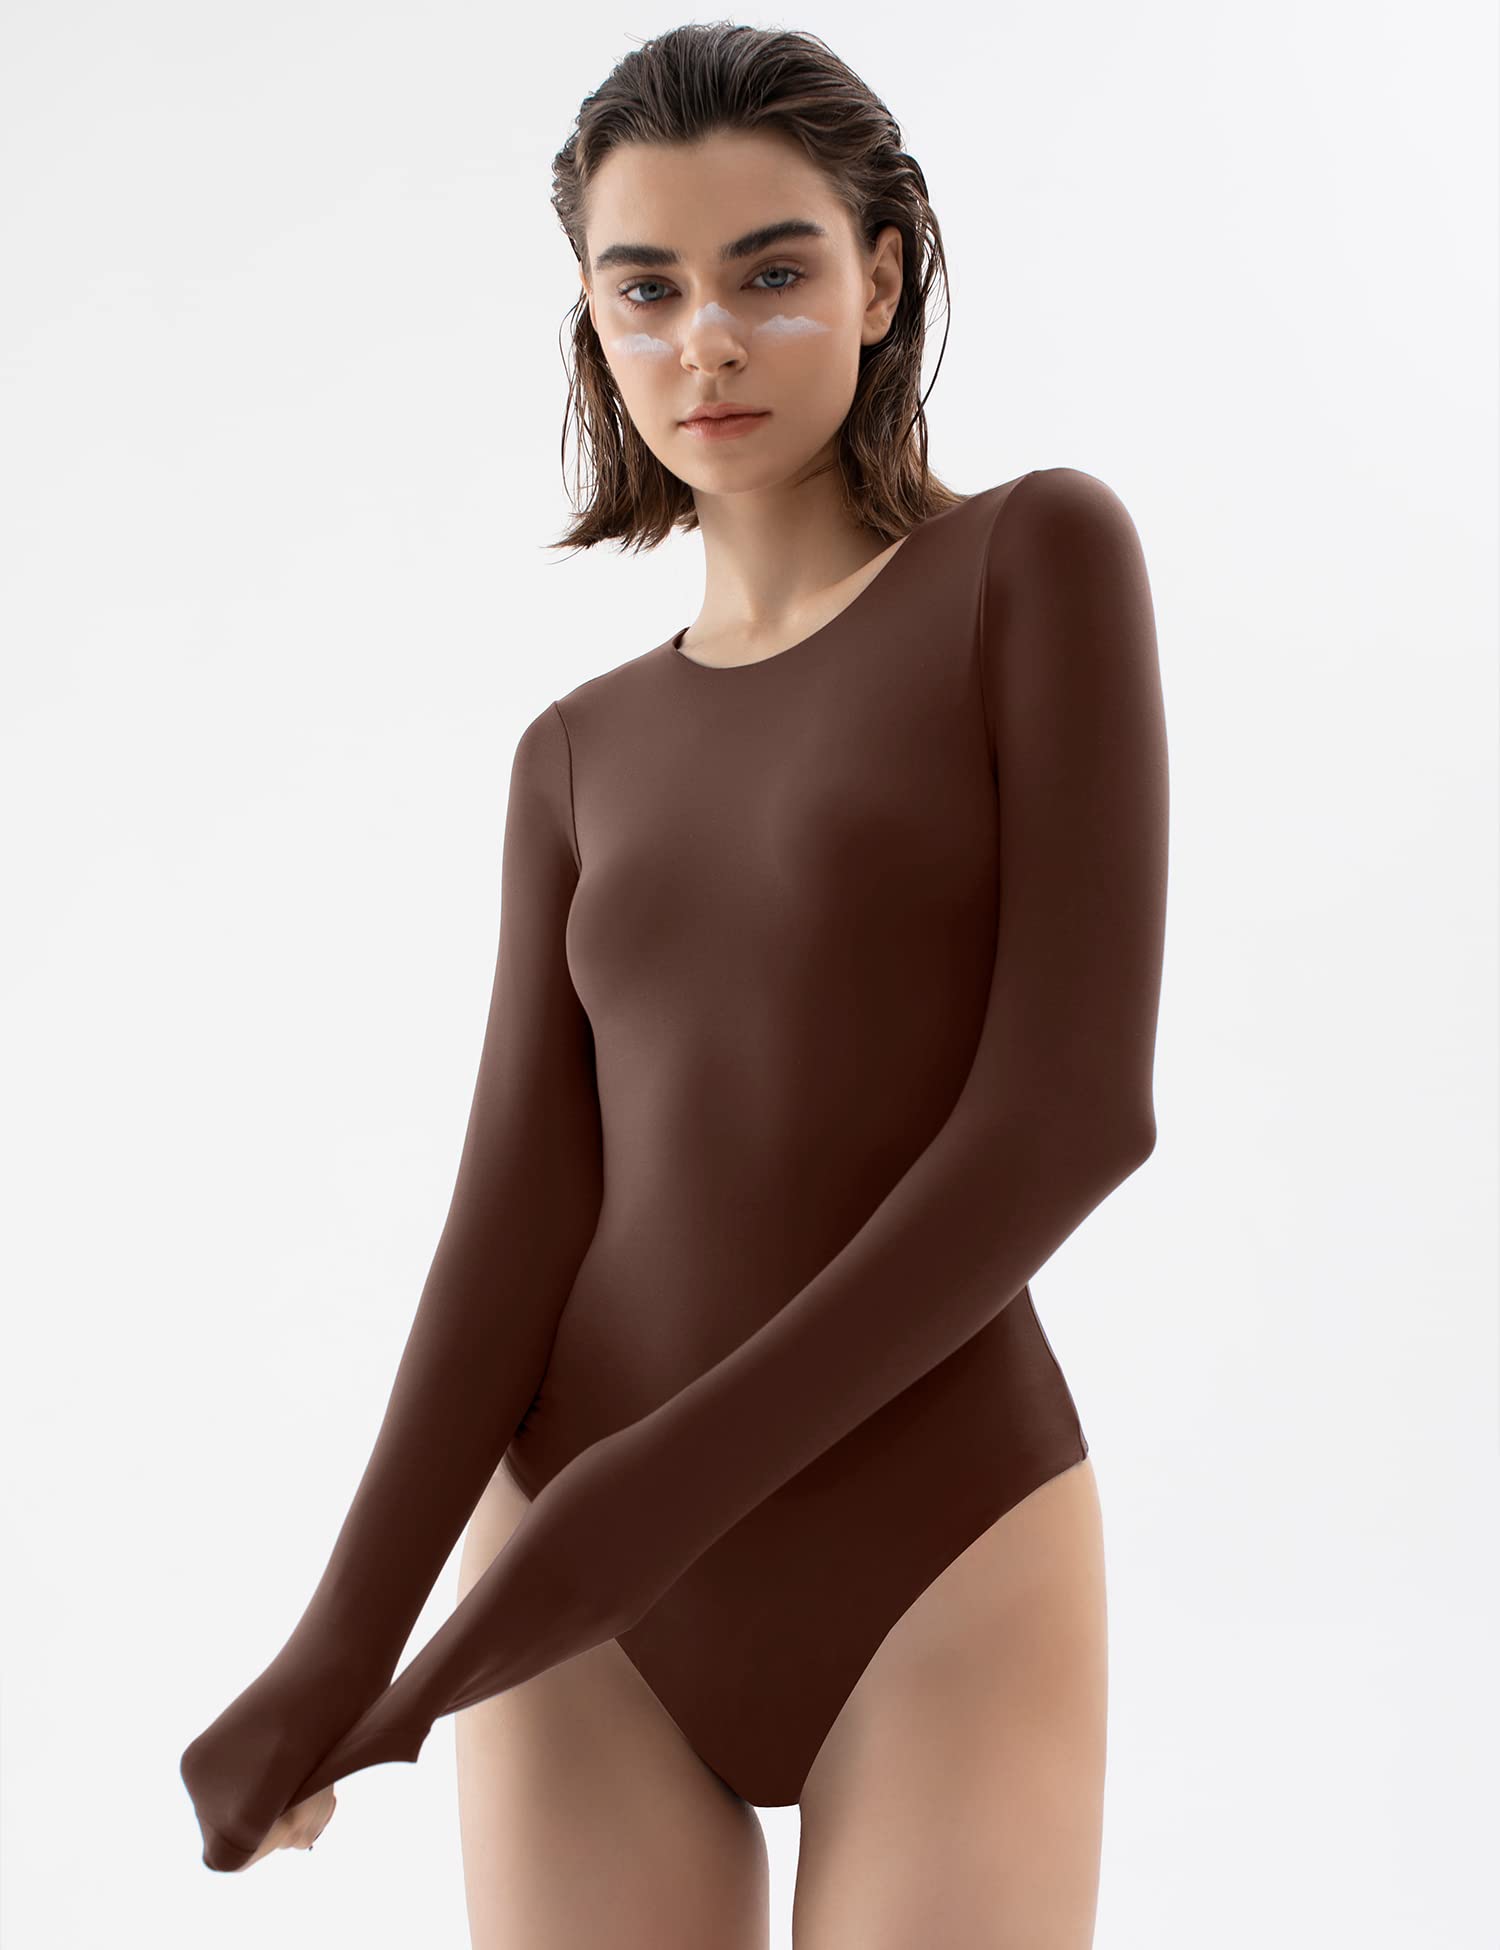  PUMIEY Long Sleeve Bodysuits For Women Mesh Body